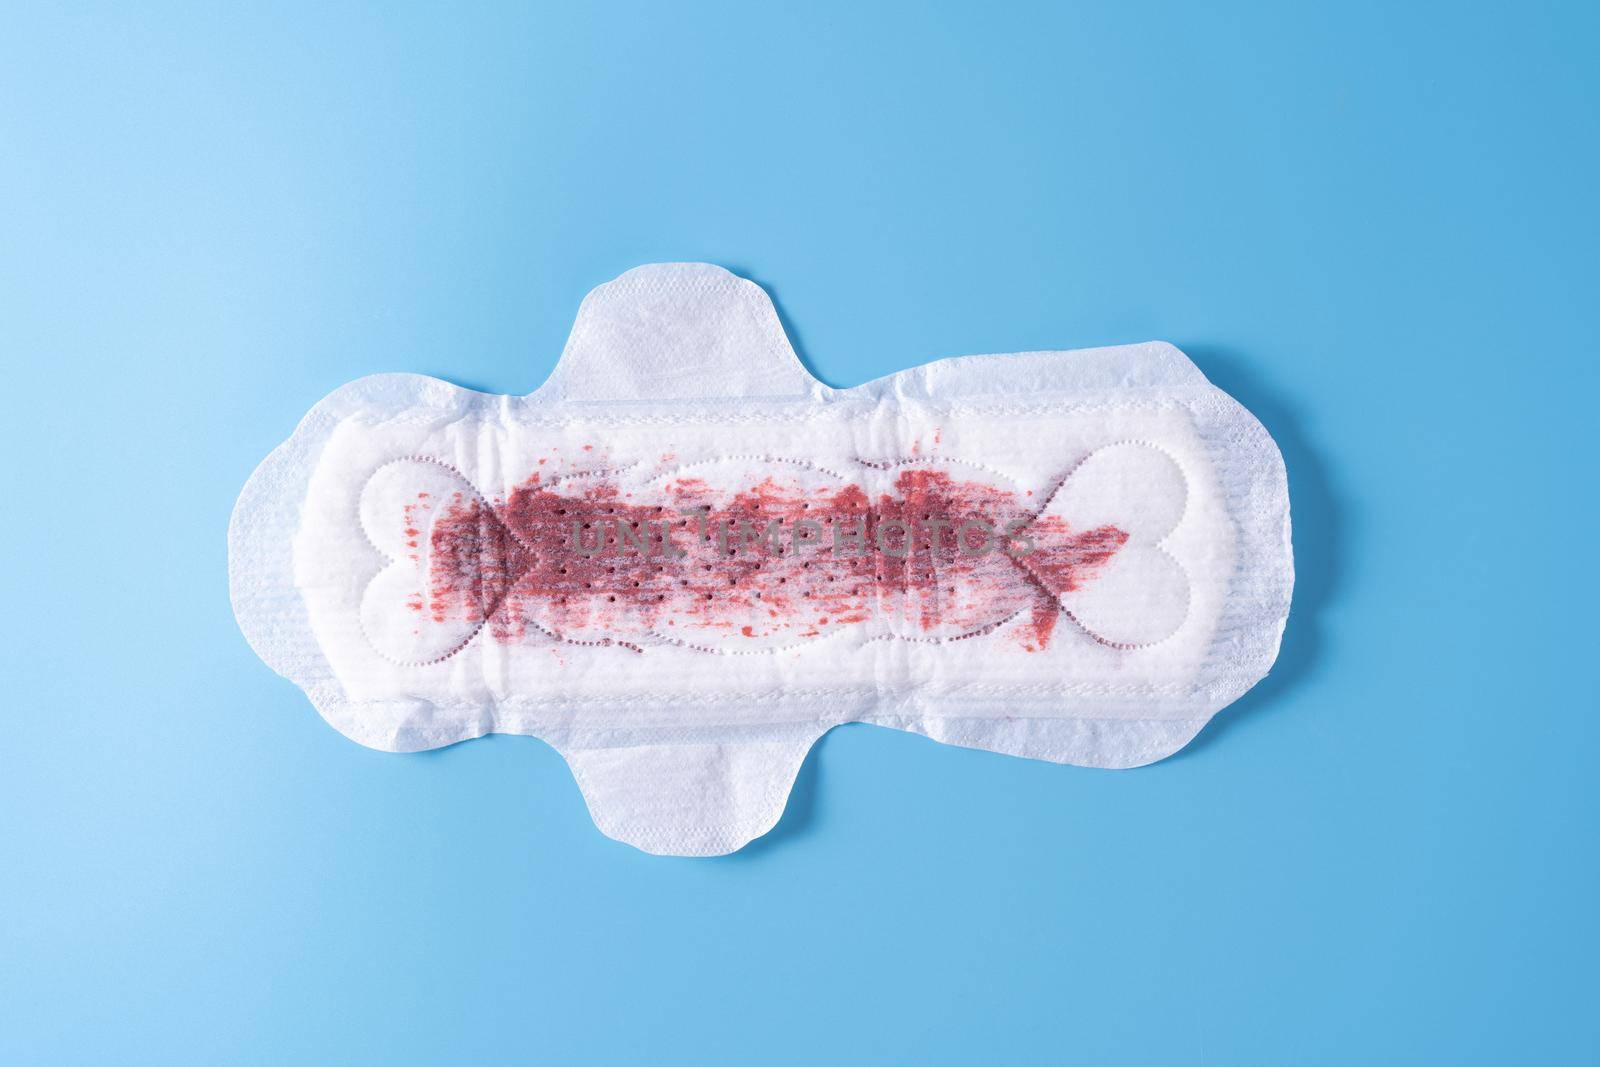 Used Sanitary pad, Sanitary napkin on blue background. Menstruation, Feminine hygiene, top view. by mikesaran